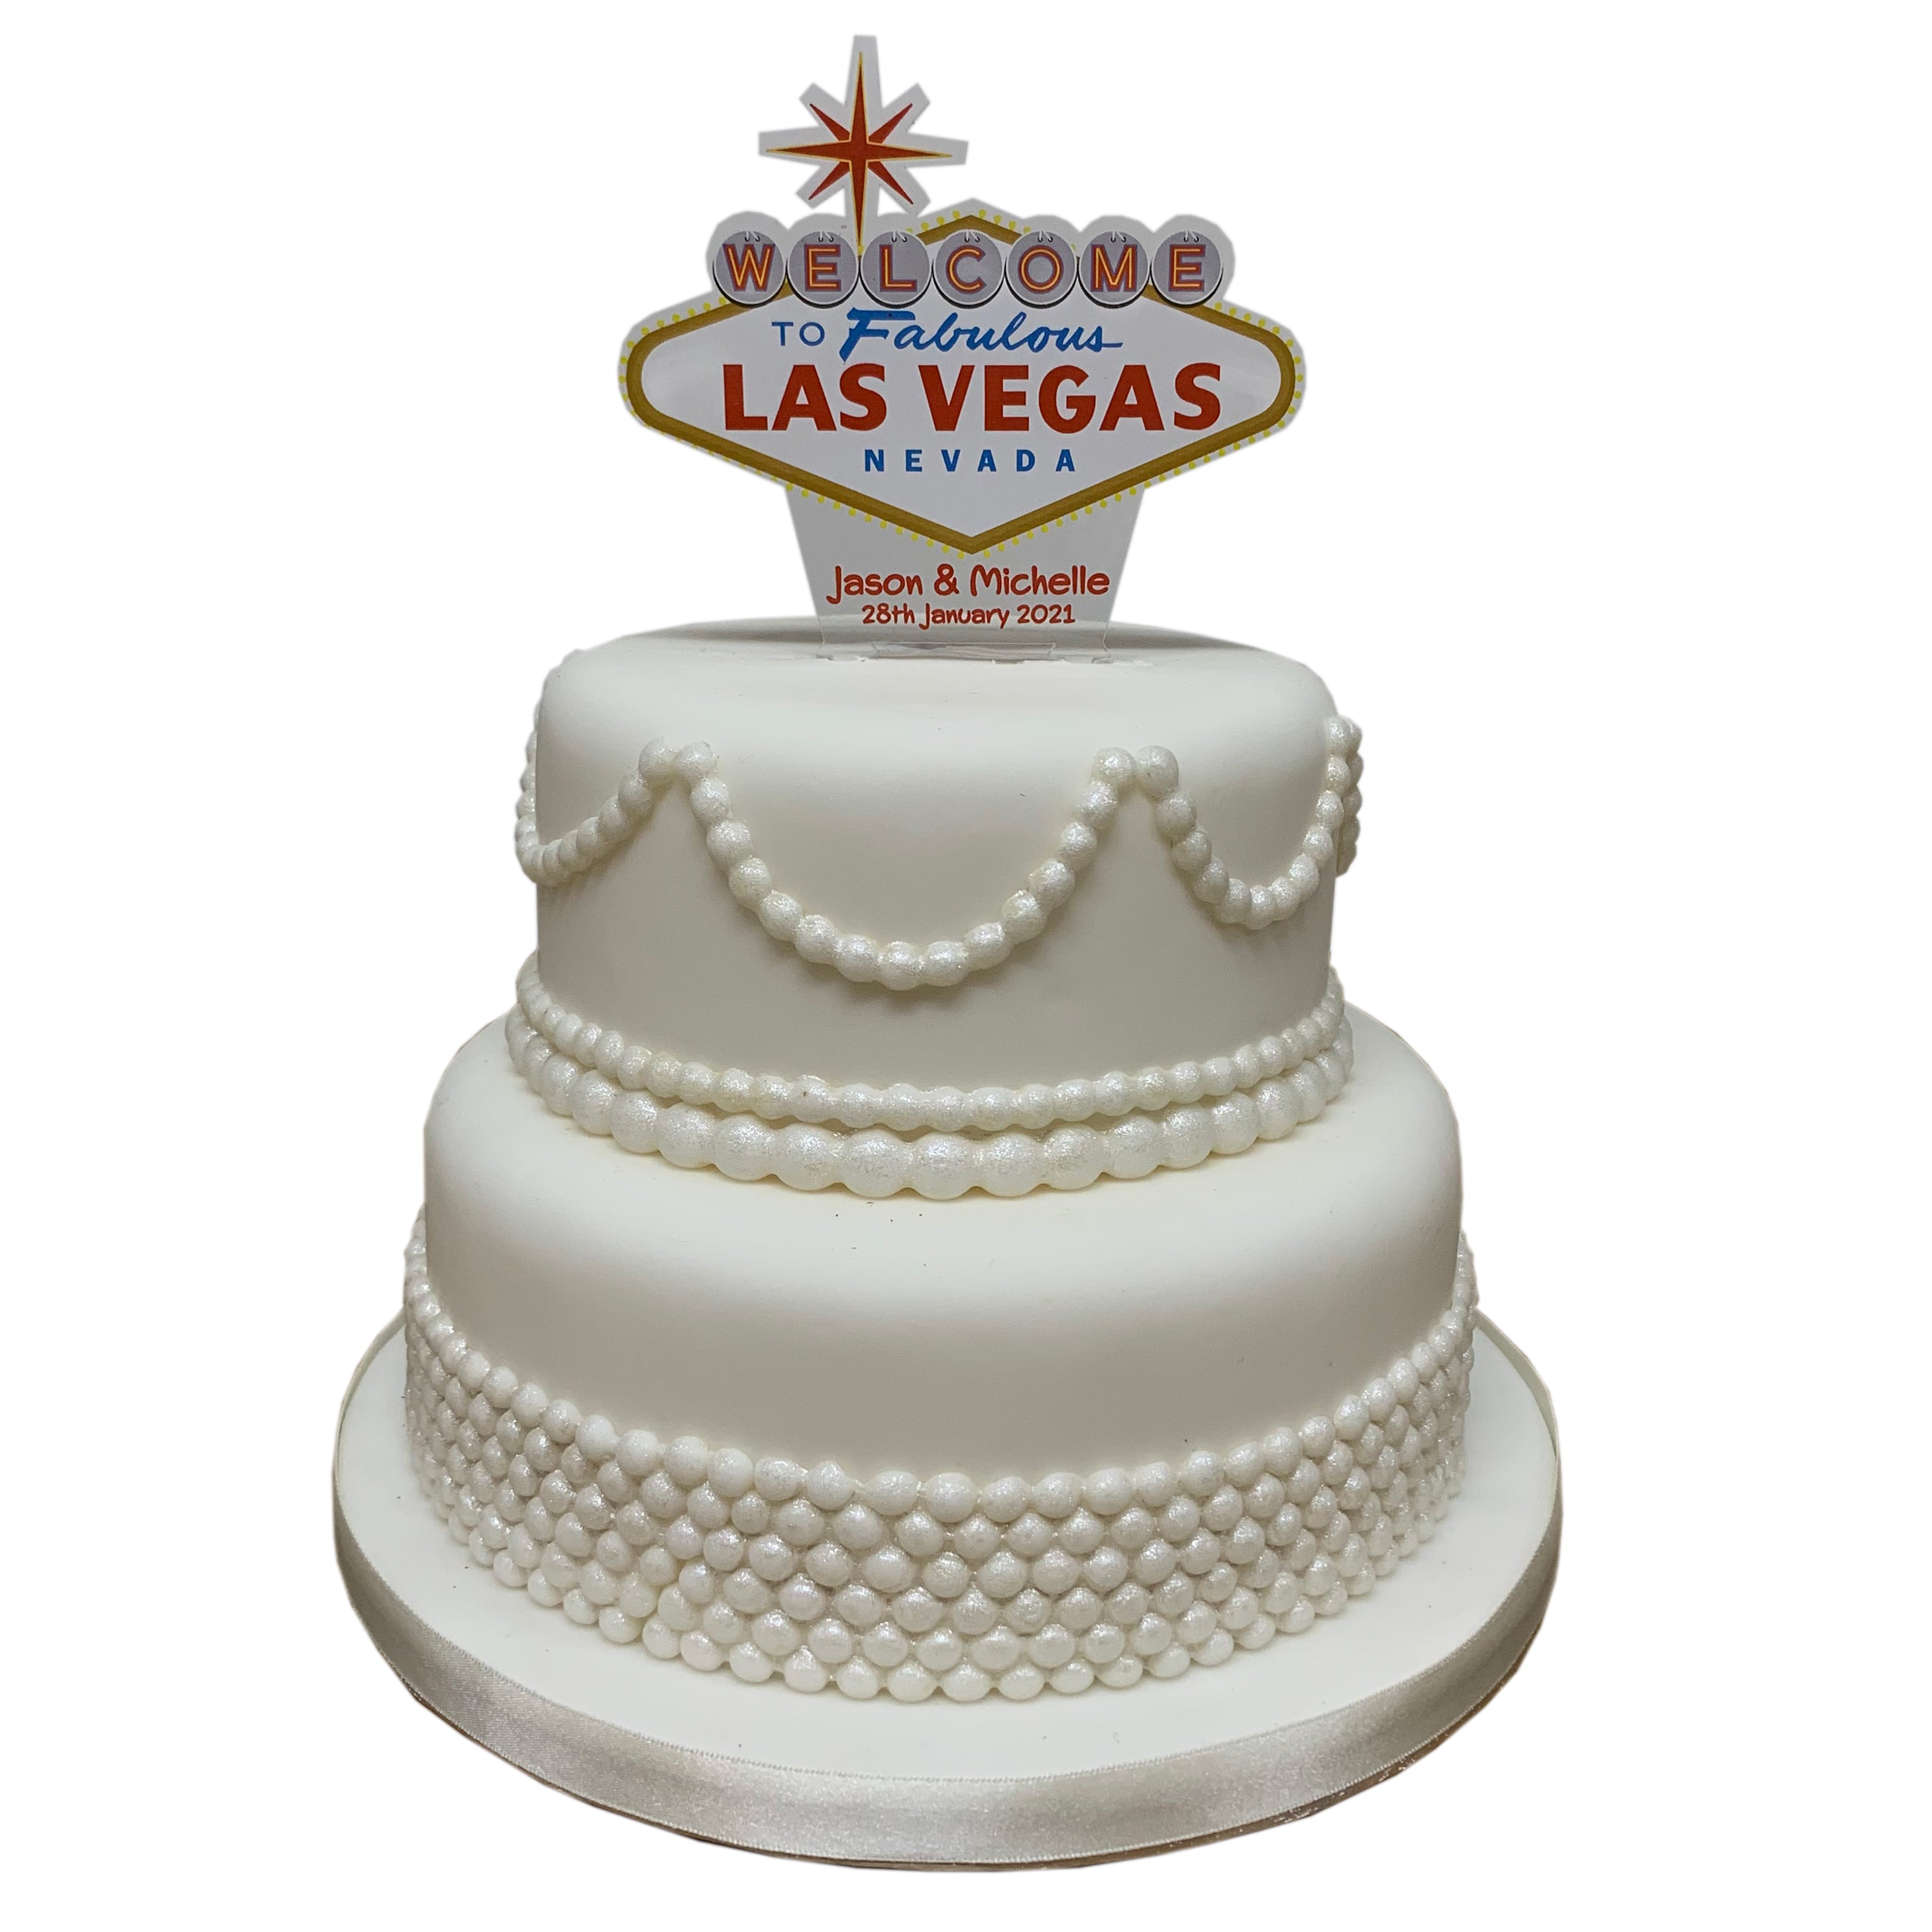 Las Vegas 50th Birthday Invite Red Gold & Black Casino Chips 